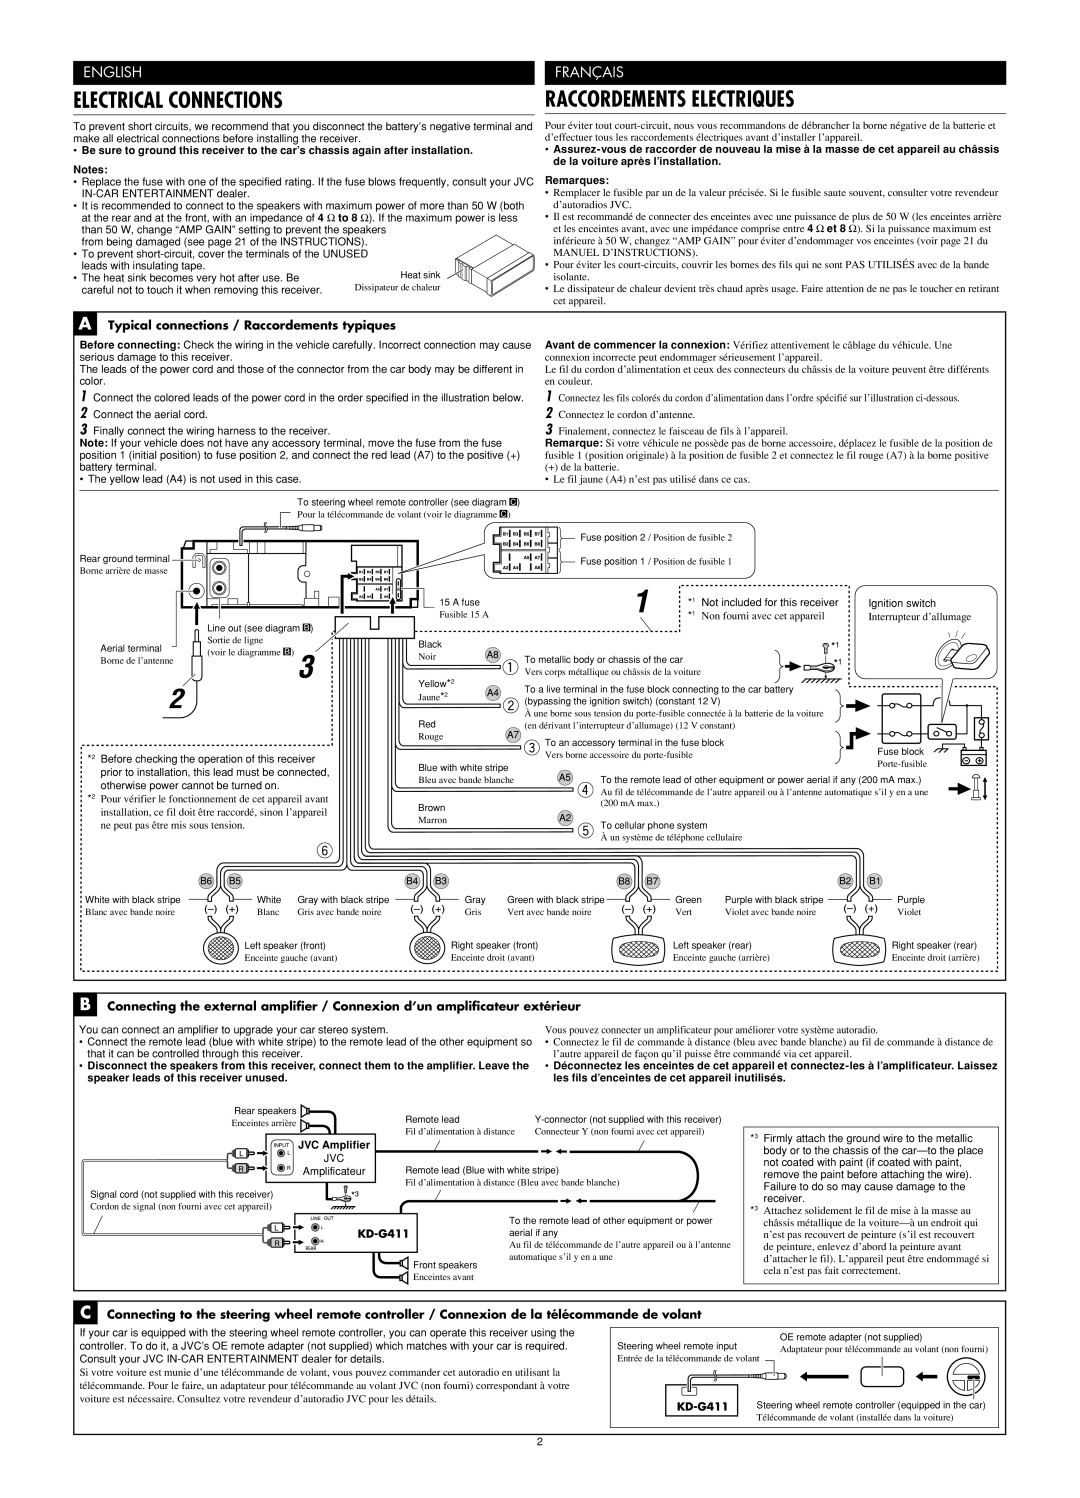 JVC KD-G411 manual Electrical Connections, Raccordements Electriques, English, Français 